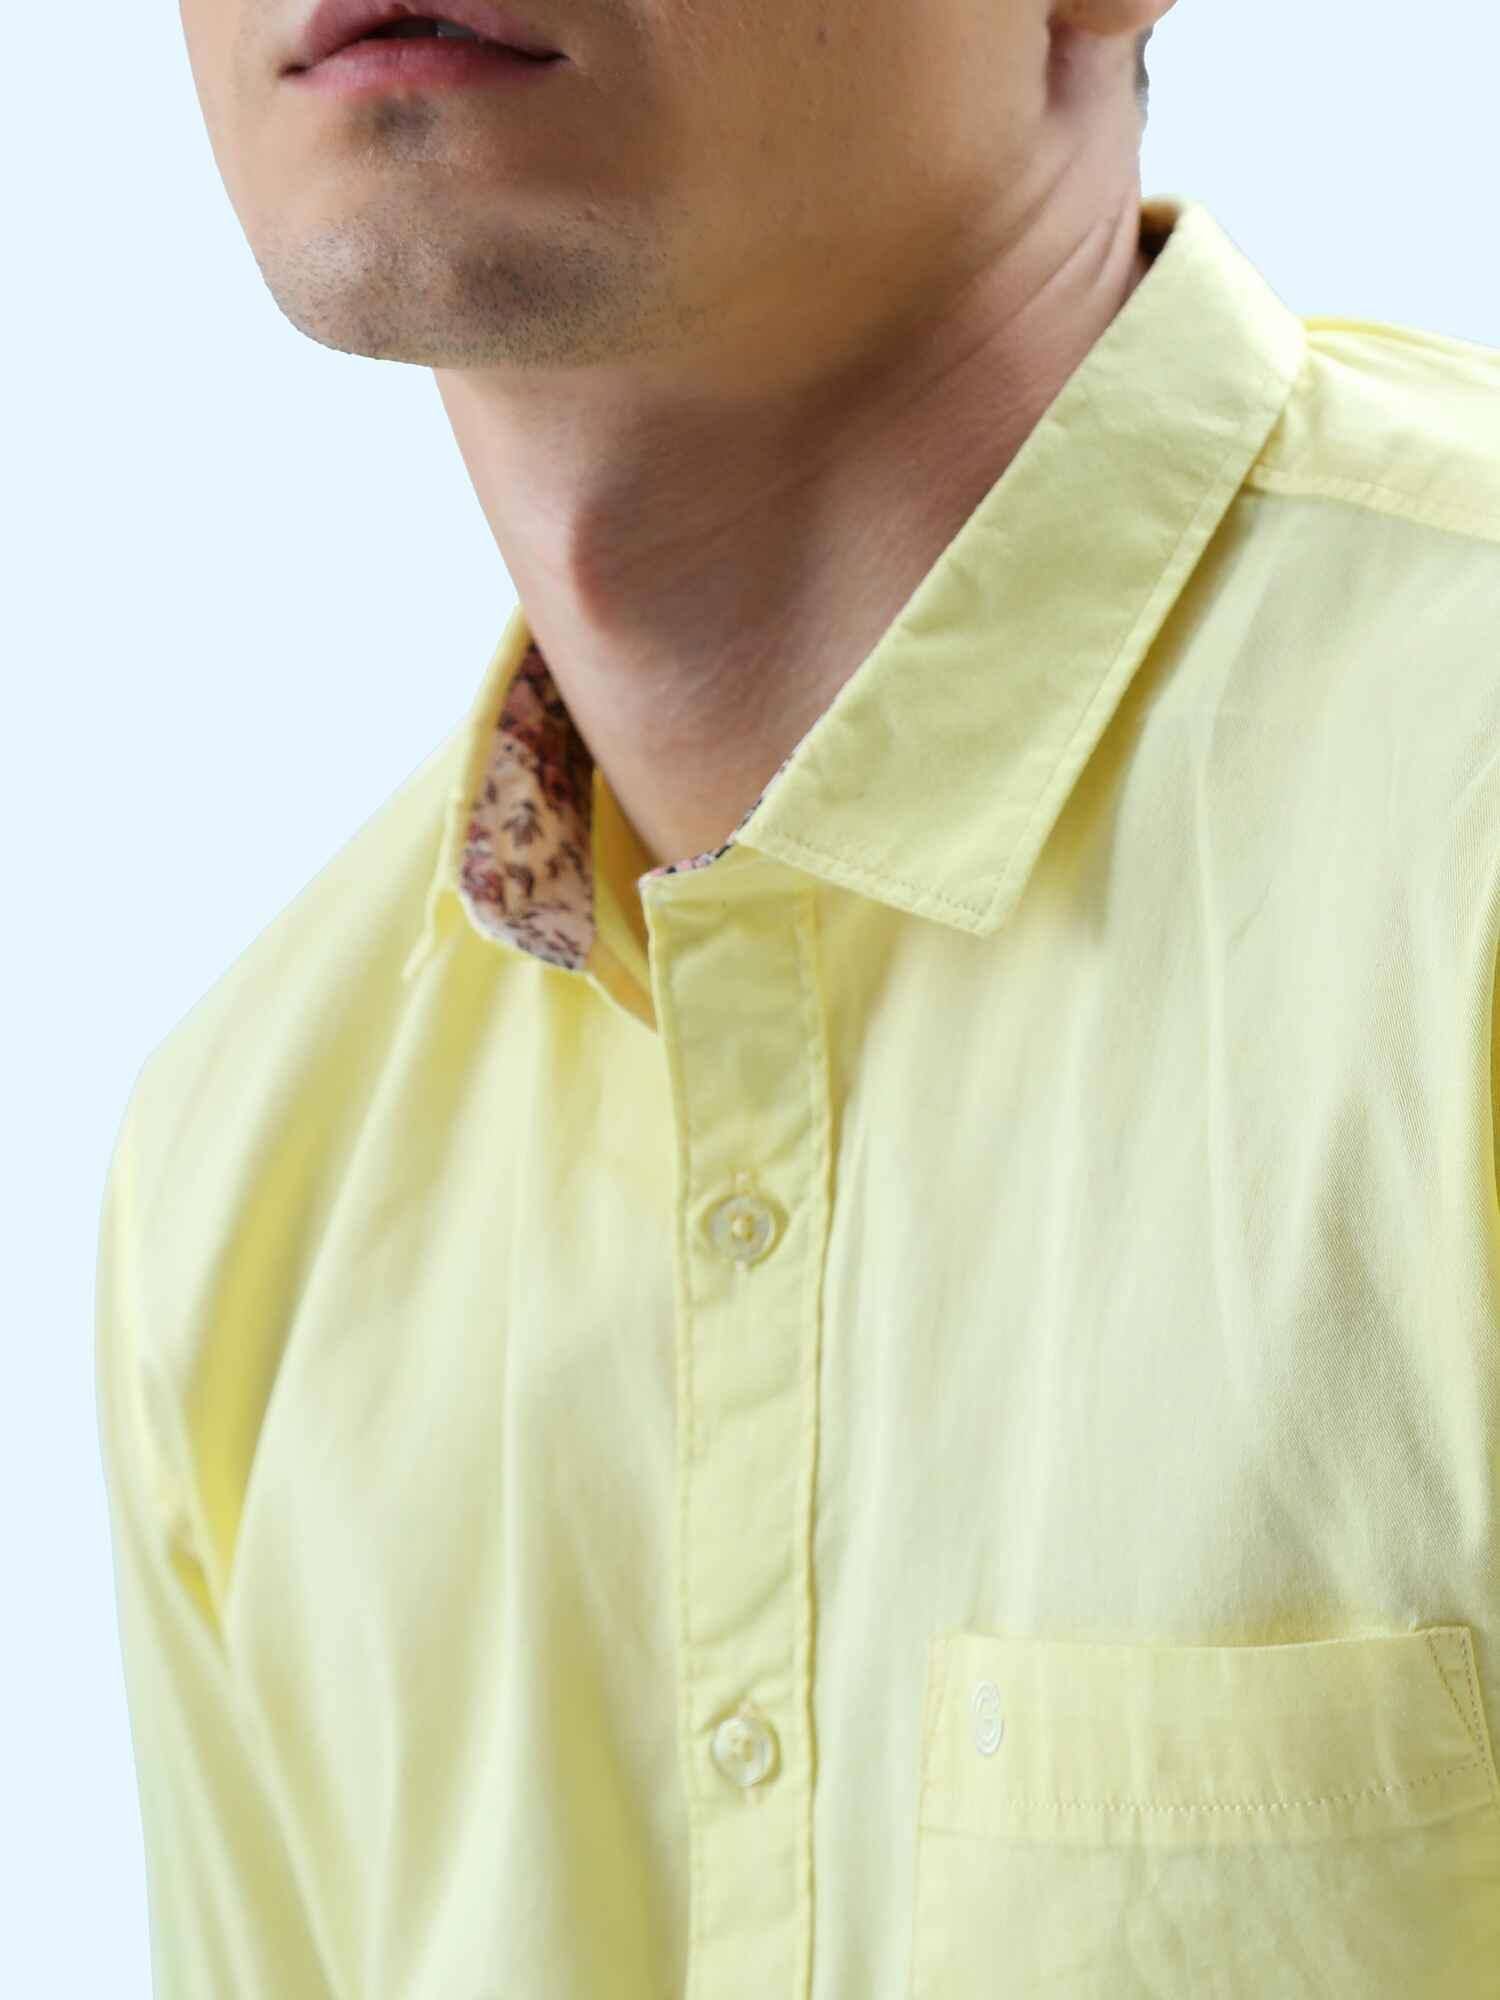 Yellow Solid Cotton Full Sleeve Shirt - Guniaa Fashions